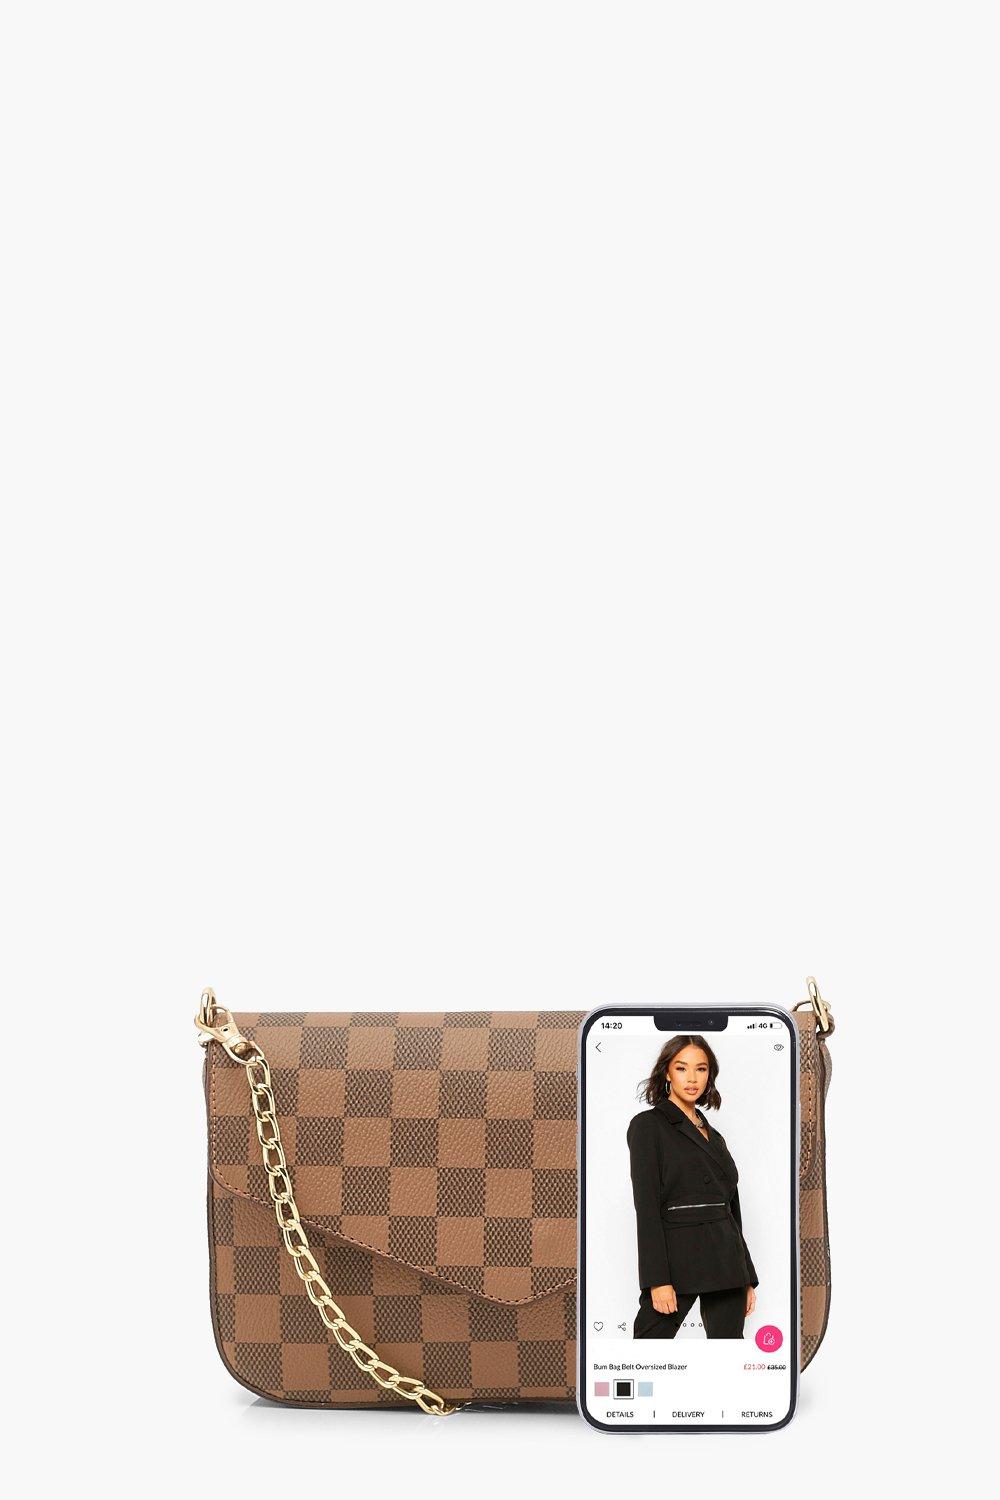 Cutest little brown purse 👜 total Y2K mini purse. - Depop